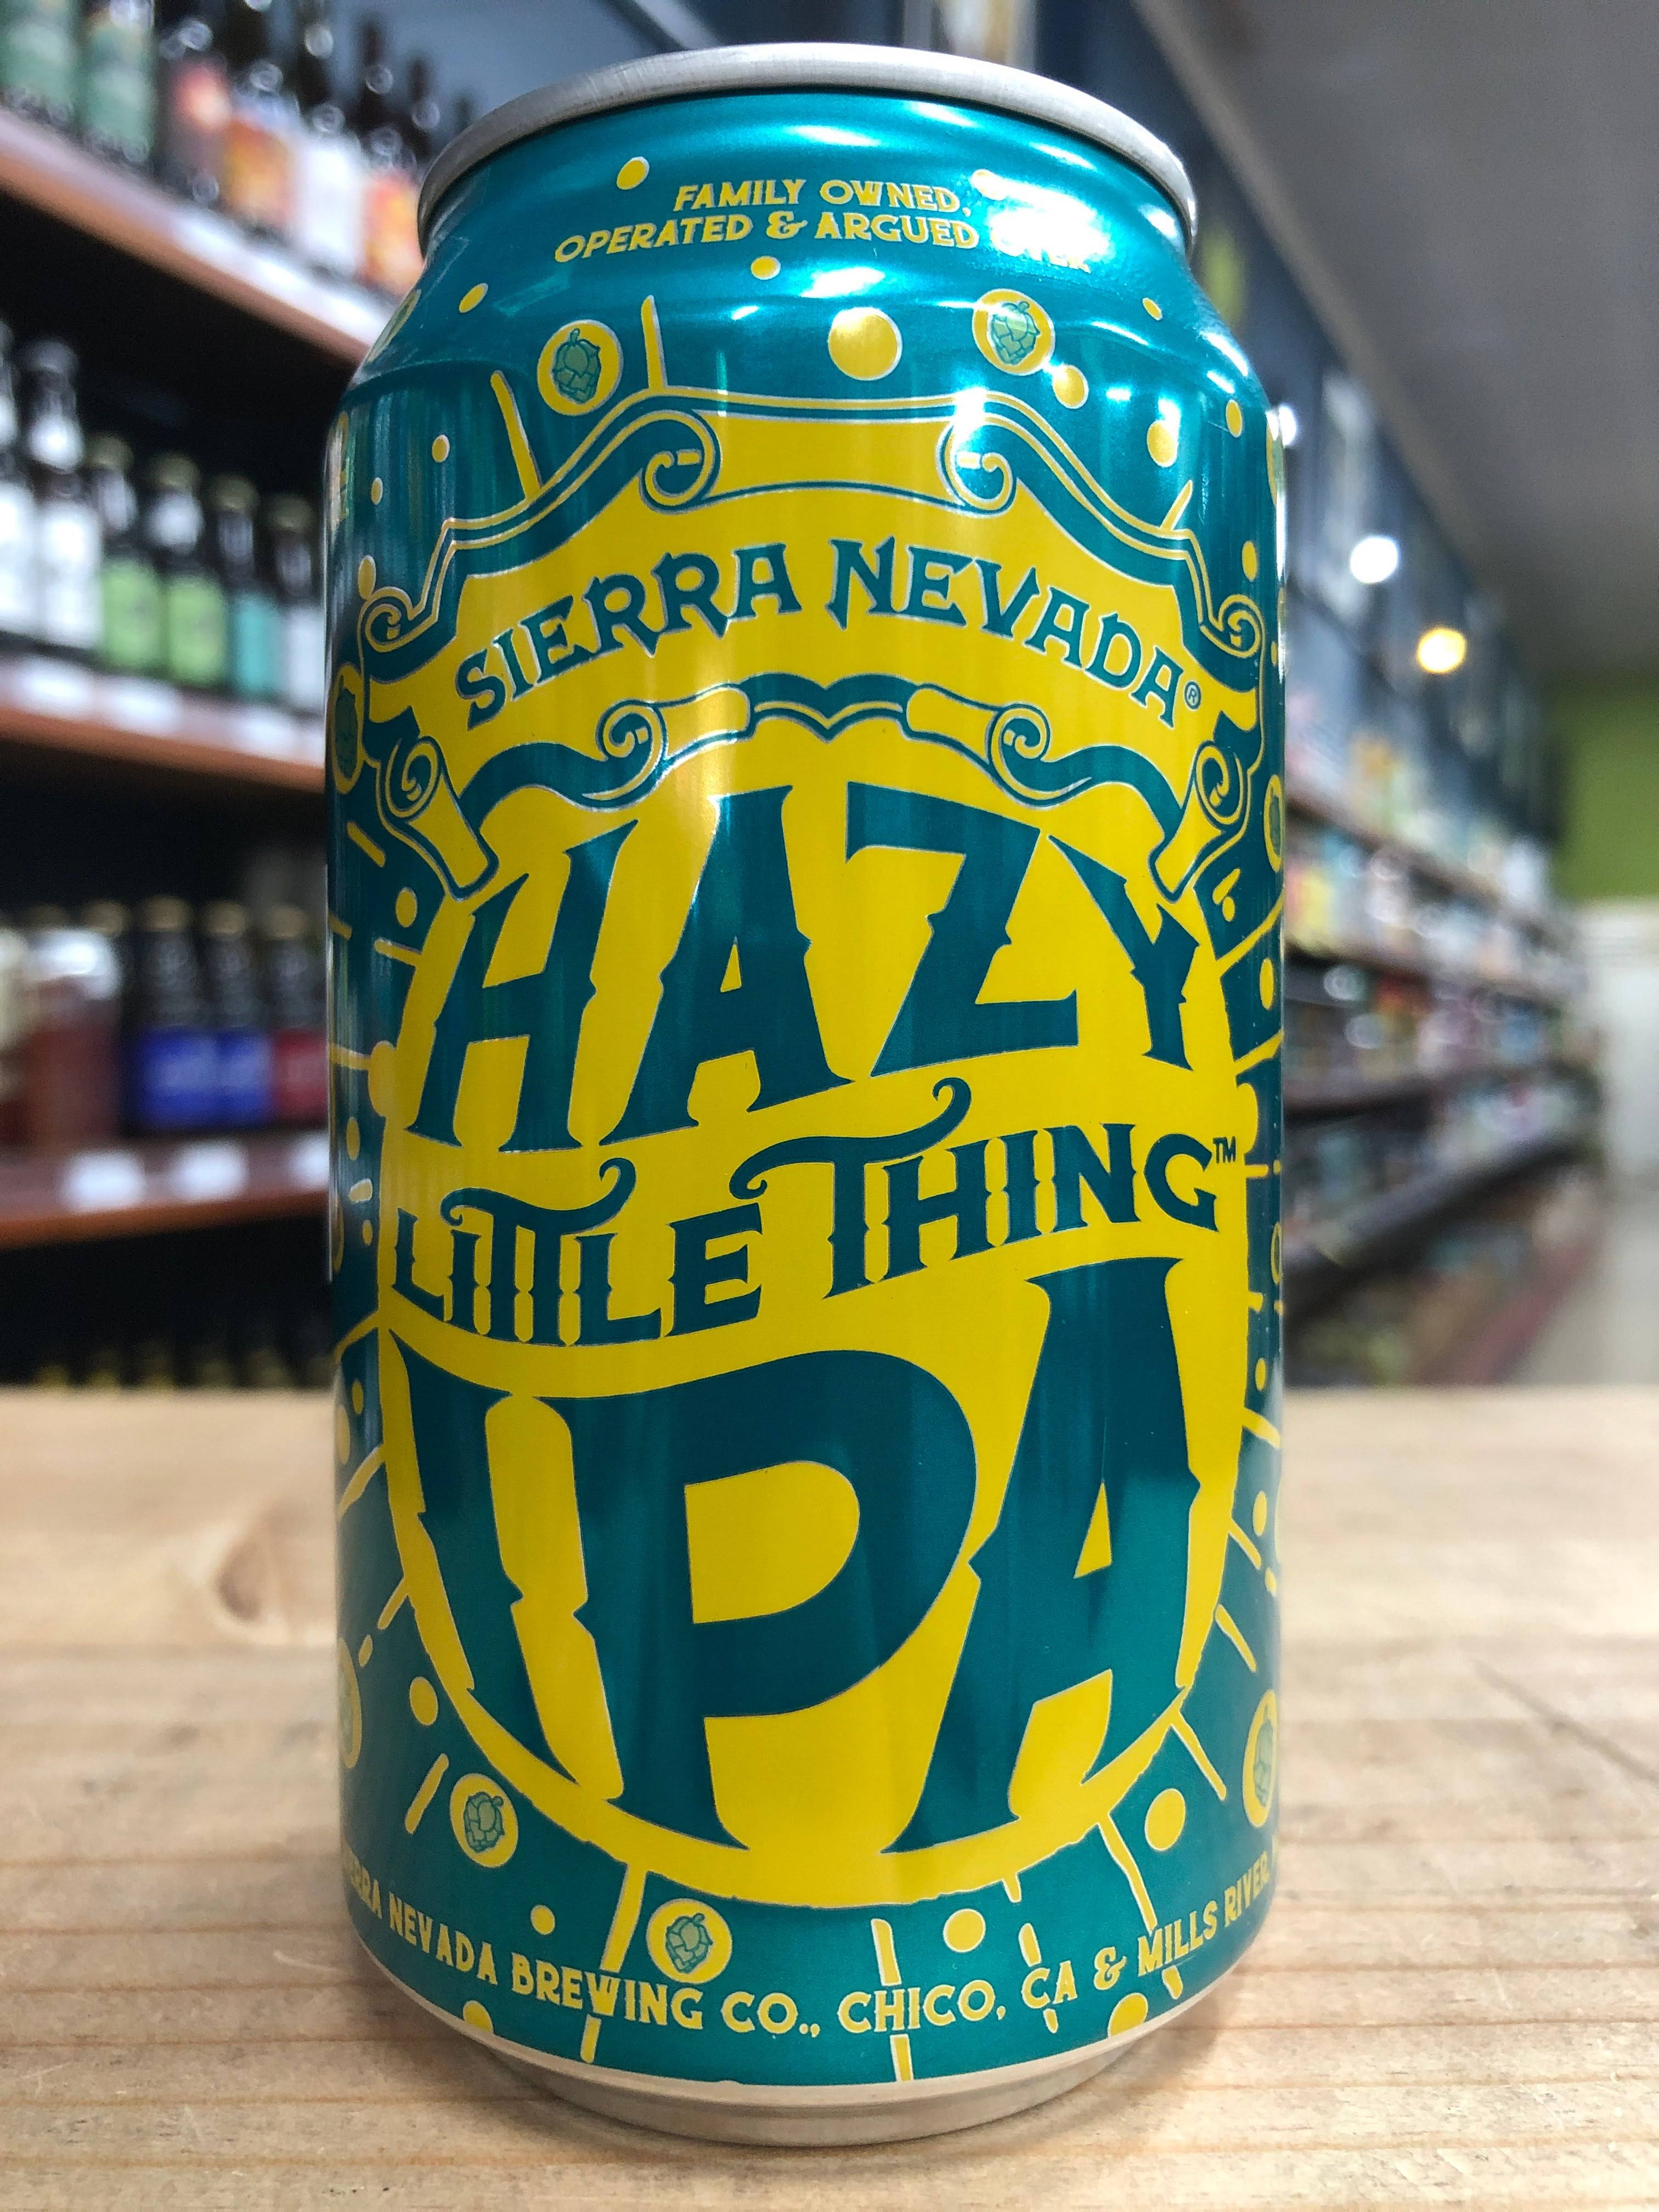 Sierra Nevada Beer, IPA, Hazy Little Thing - 12 fl oz